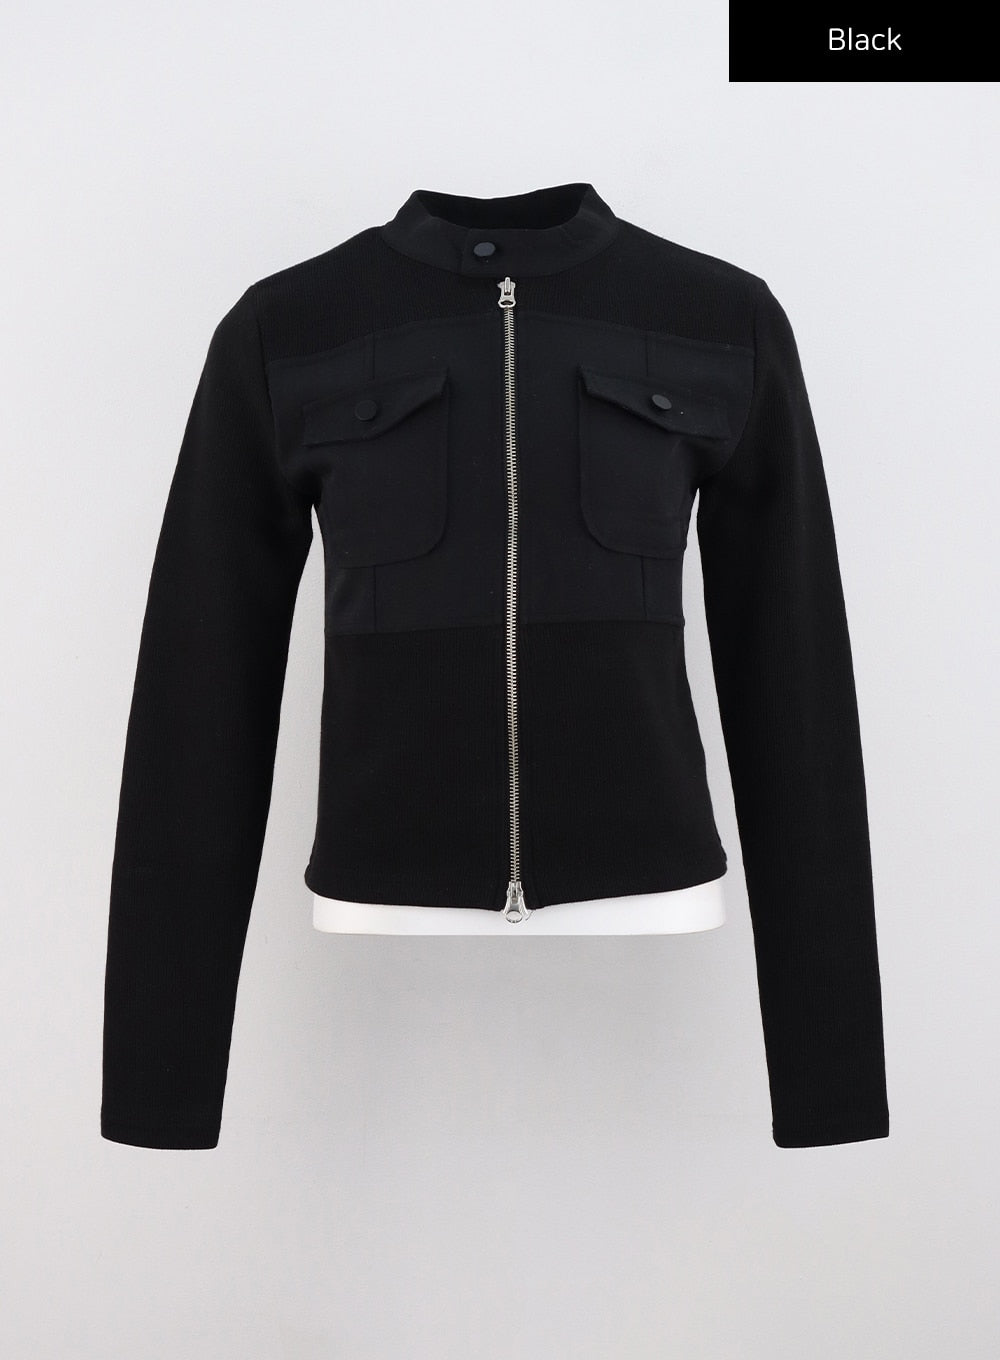 two-way-pocket-zip-up-jacket-co325 / Black